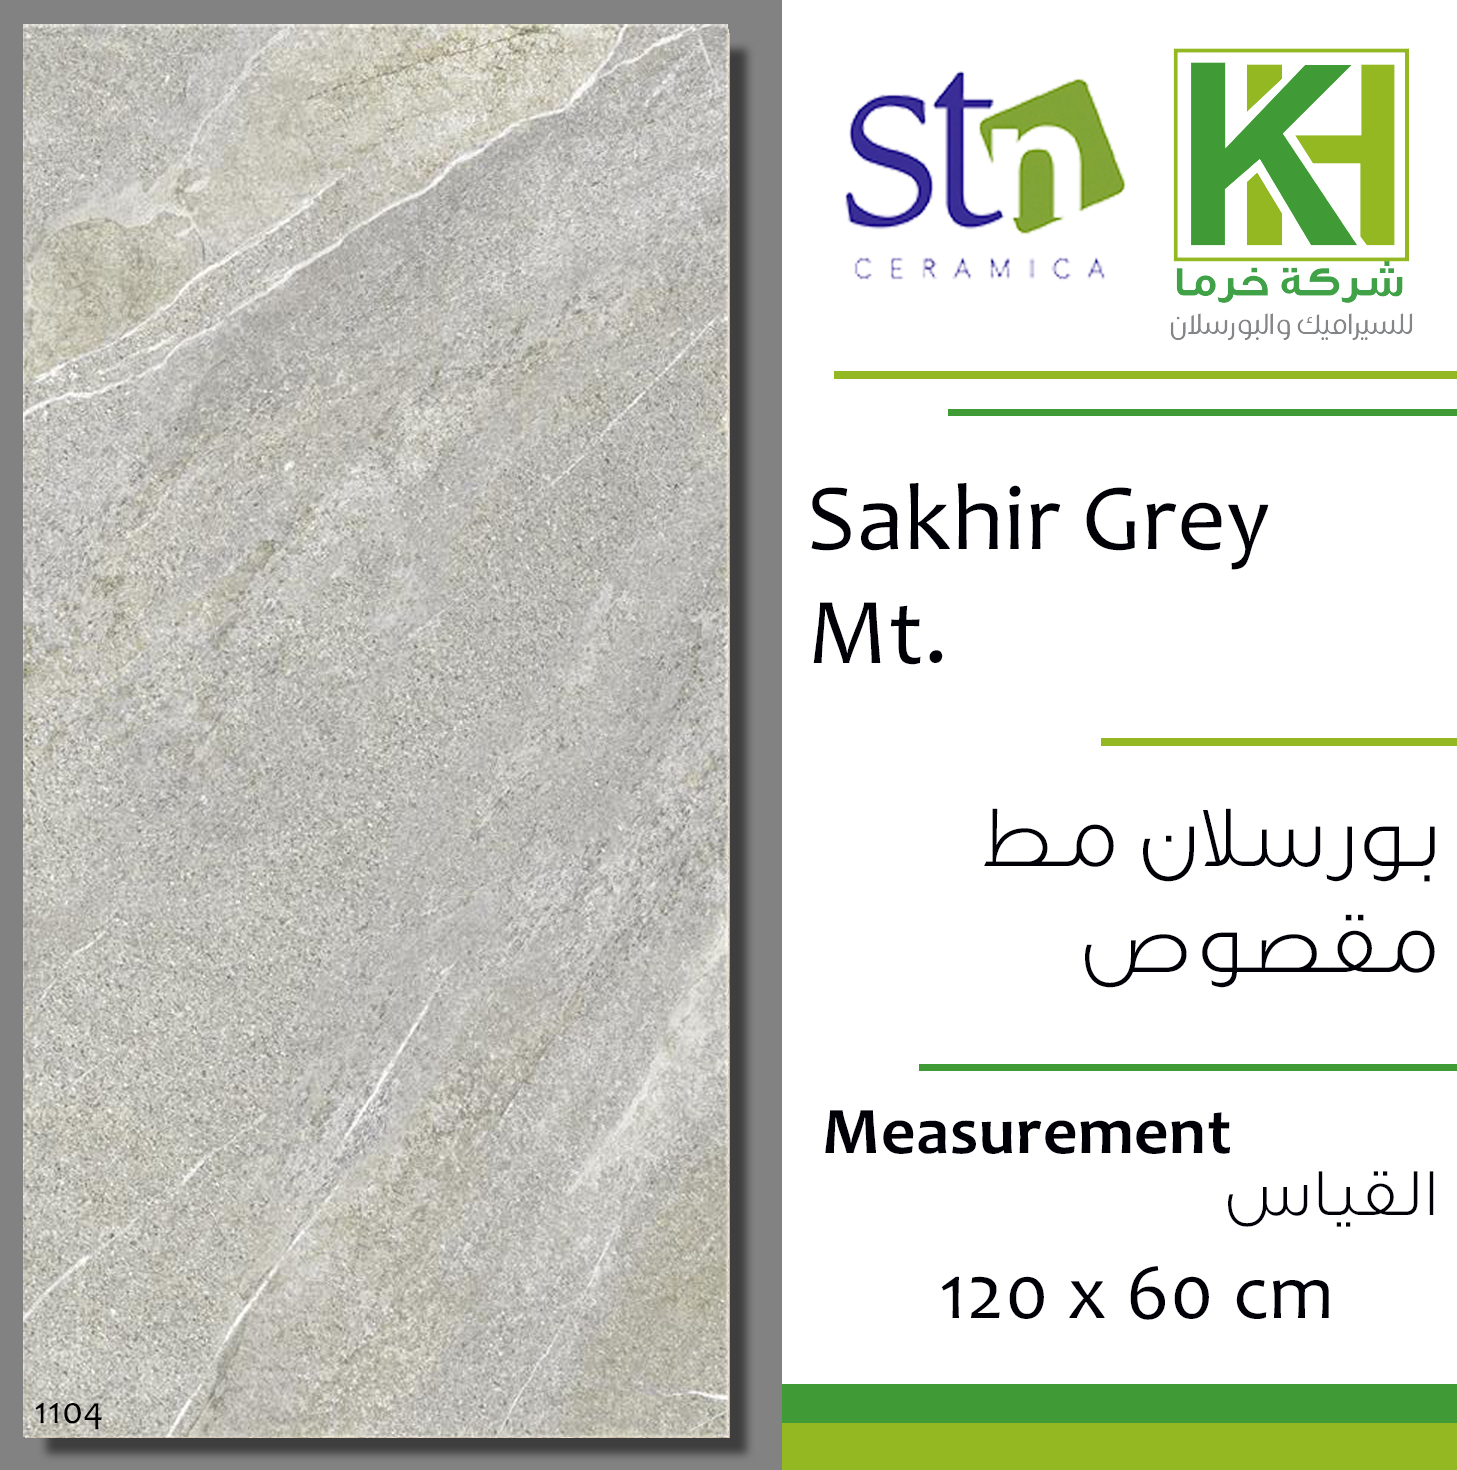 Picture of Spanish Porcelain tile 60x120cm Sakhir Grey Mt. 